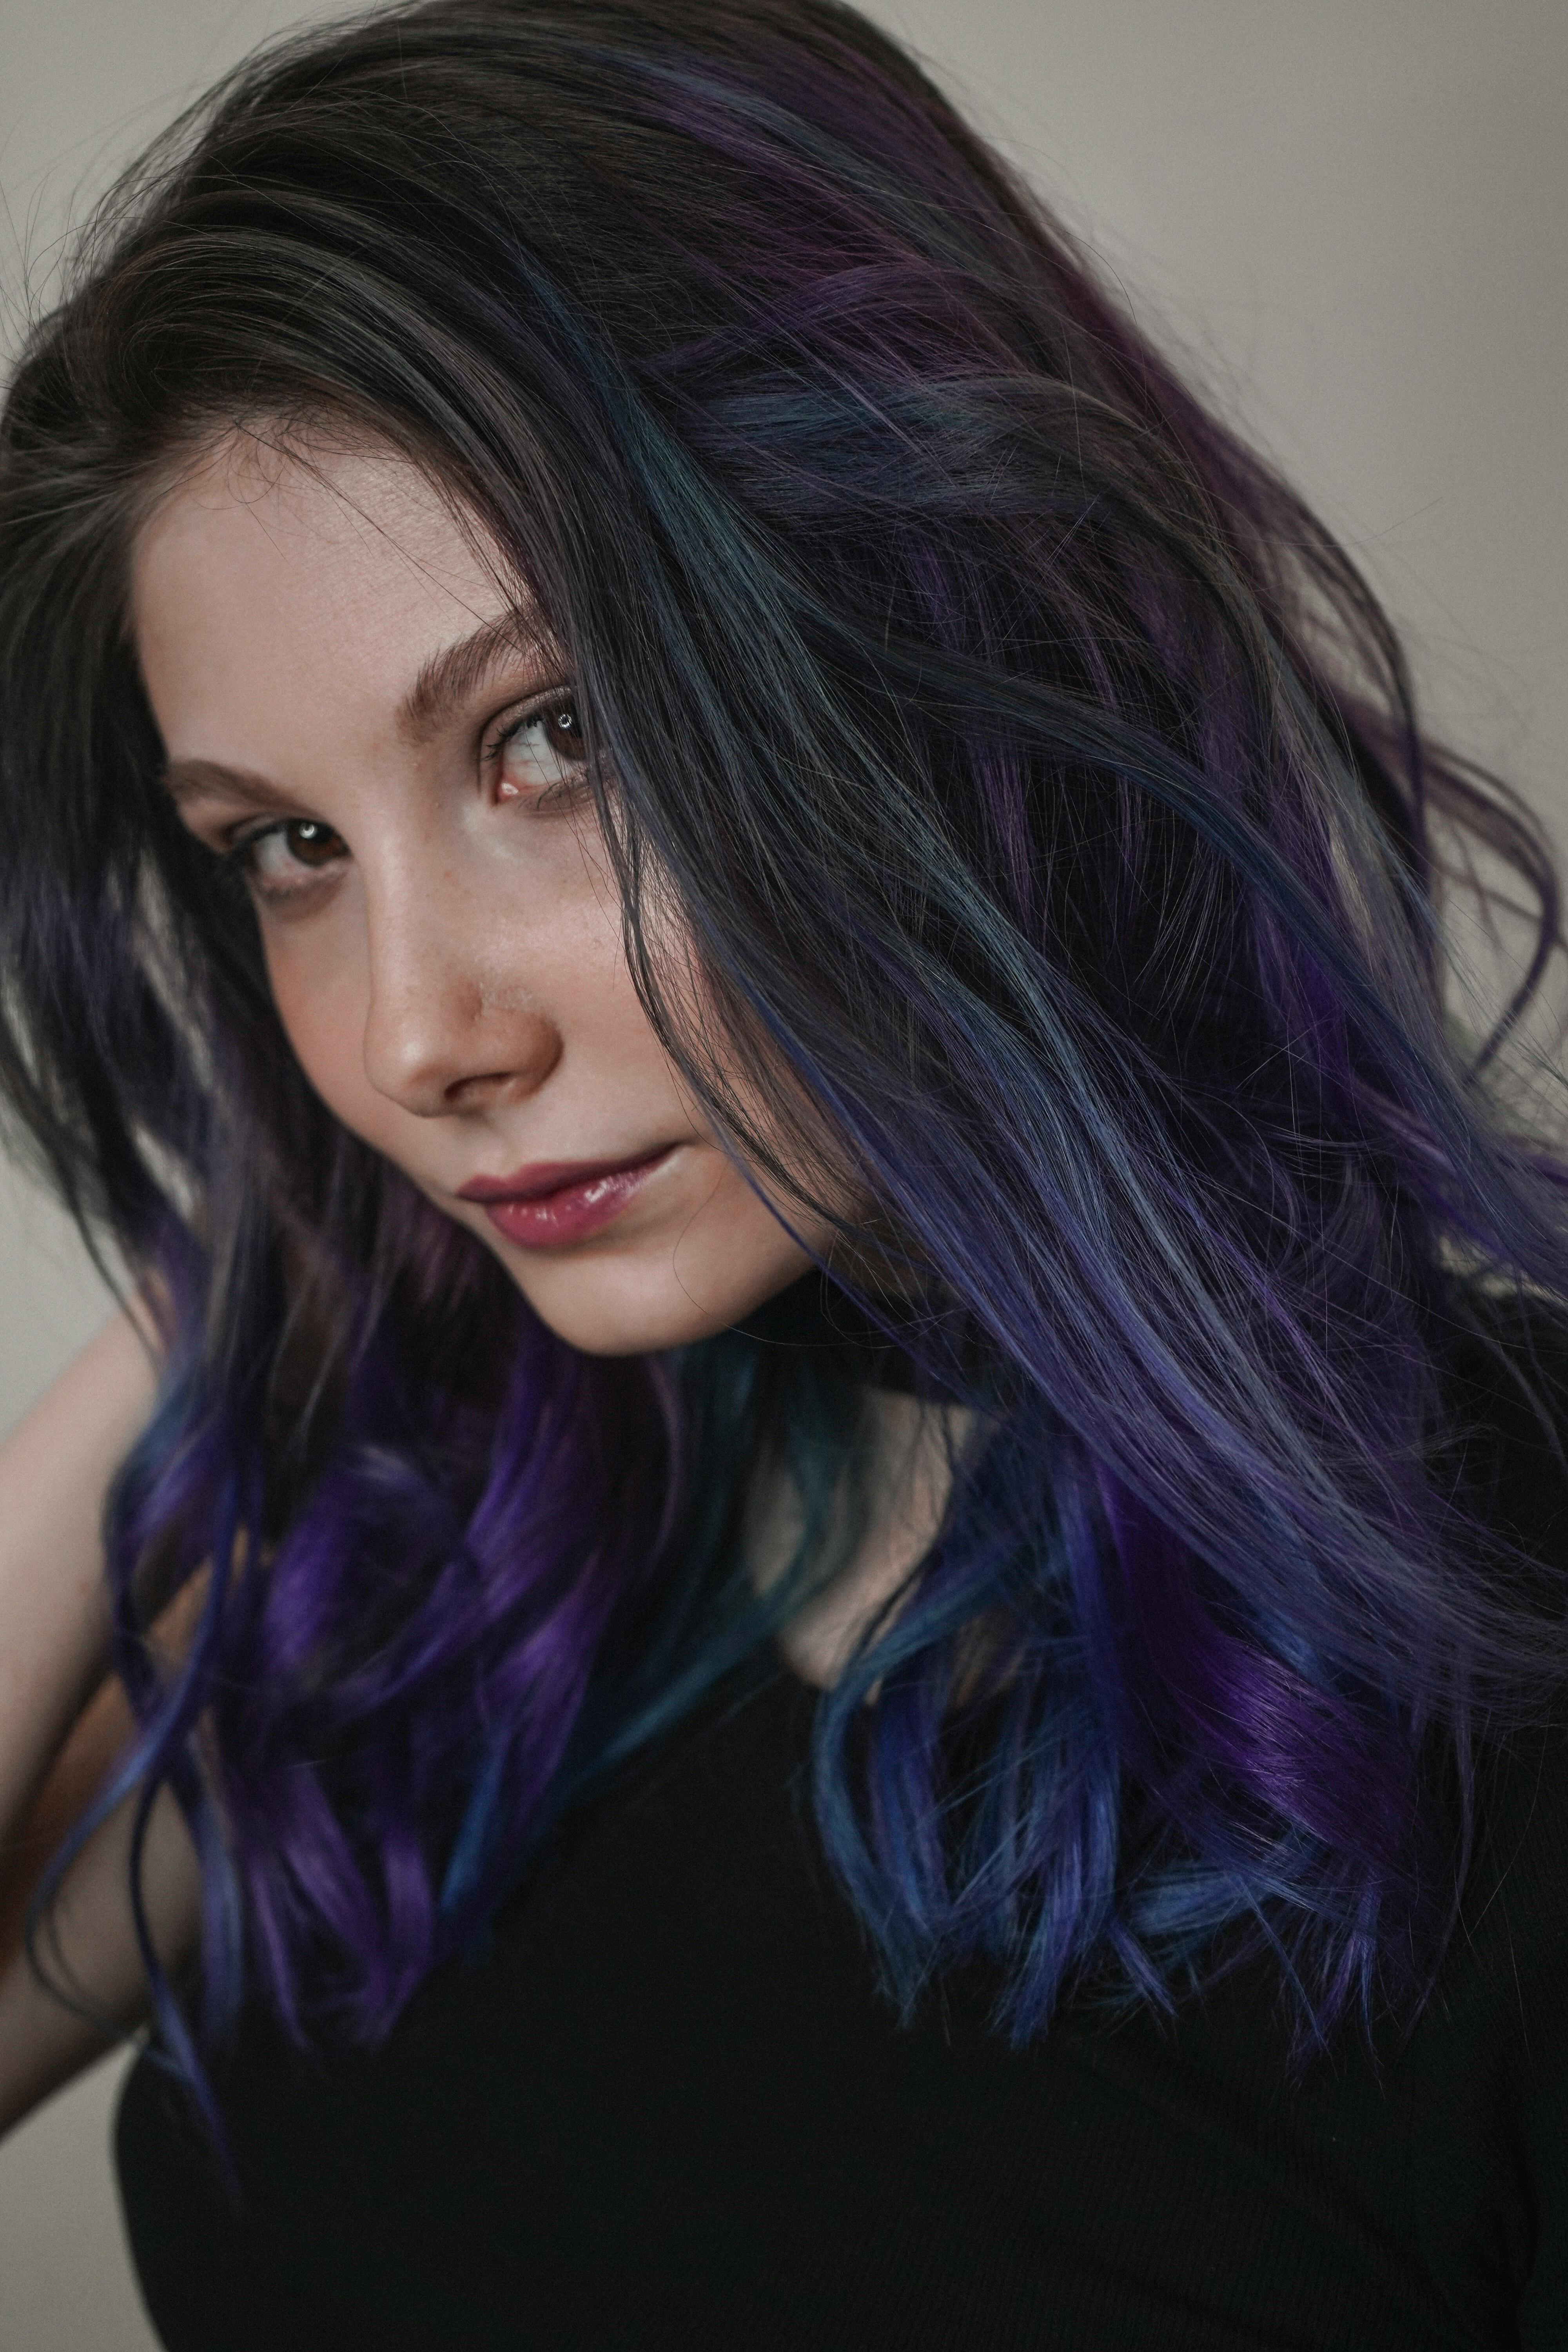 Women's Black Top and Purple Hair · Free Stock Photo